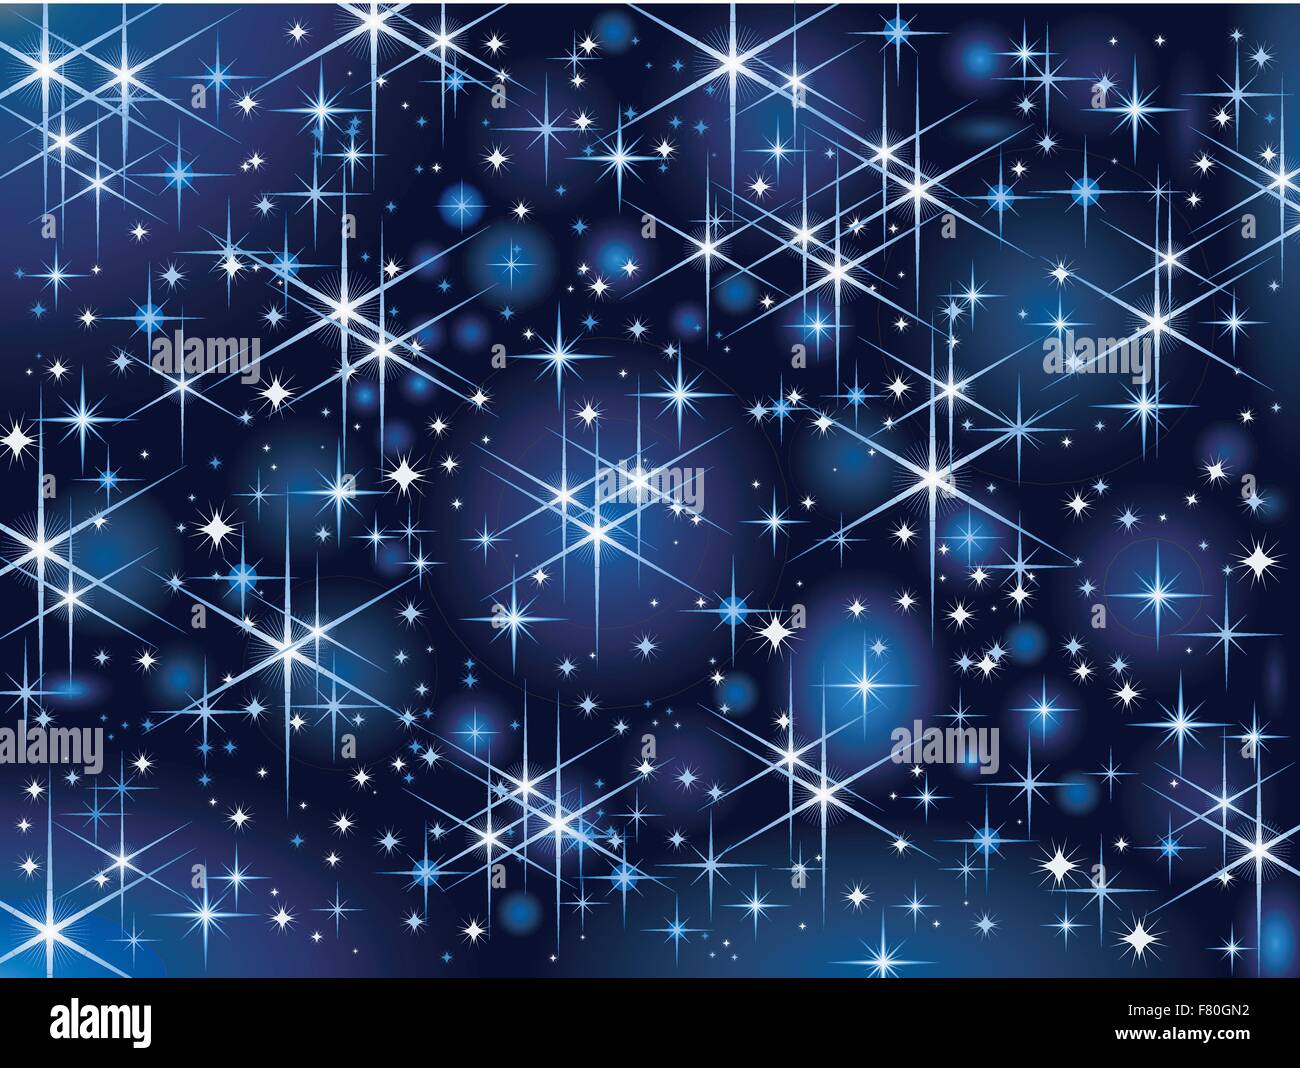 Starbright sky, Christmas sparkle Stock Vector